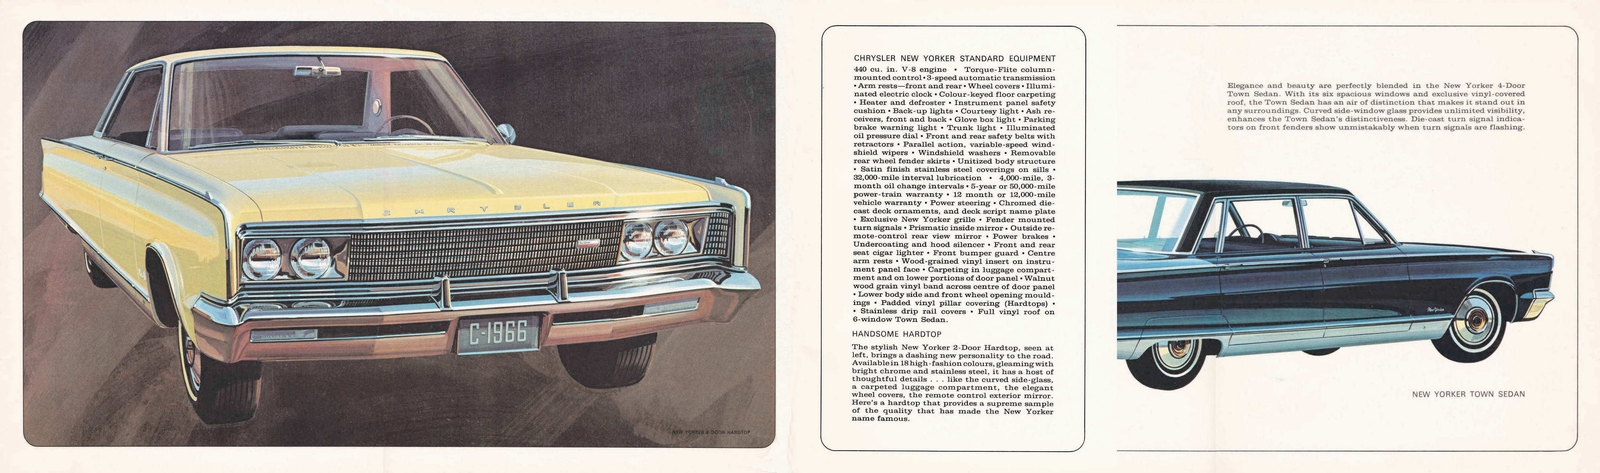 n_1966 Chrysler (Cdn)-04-05a.jpg